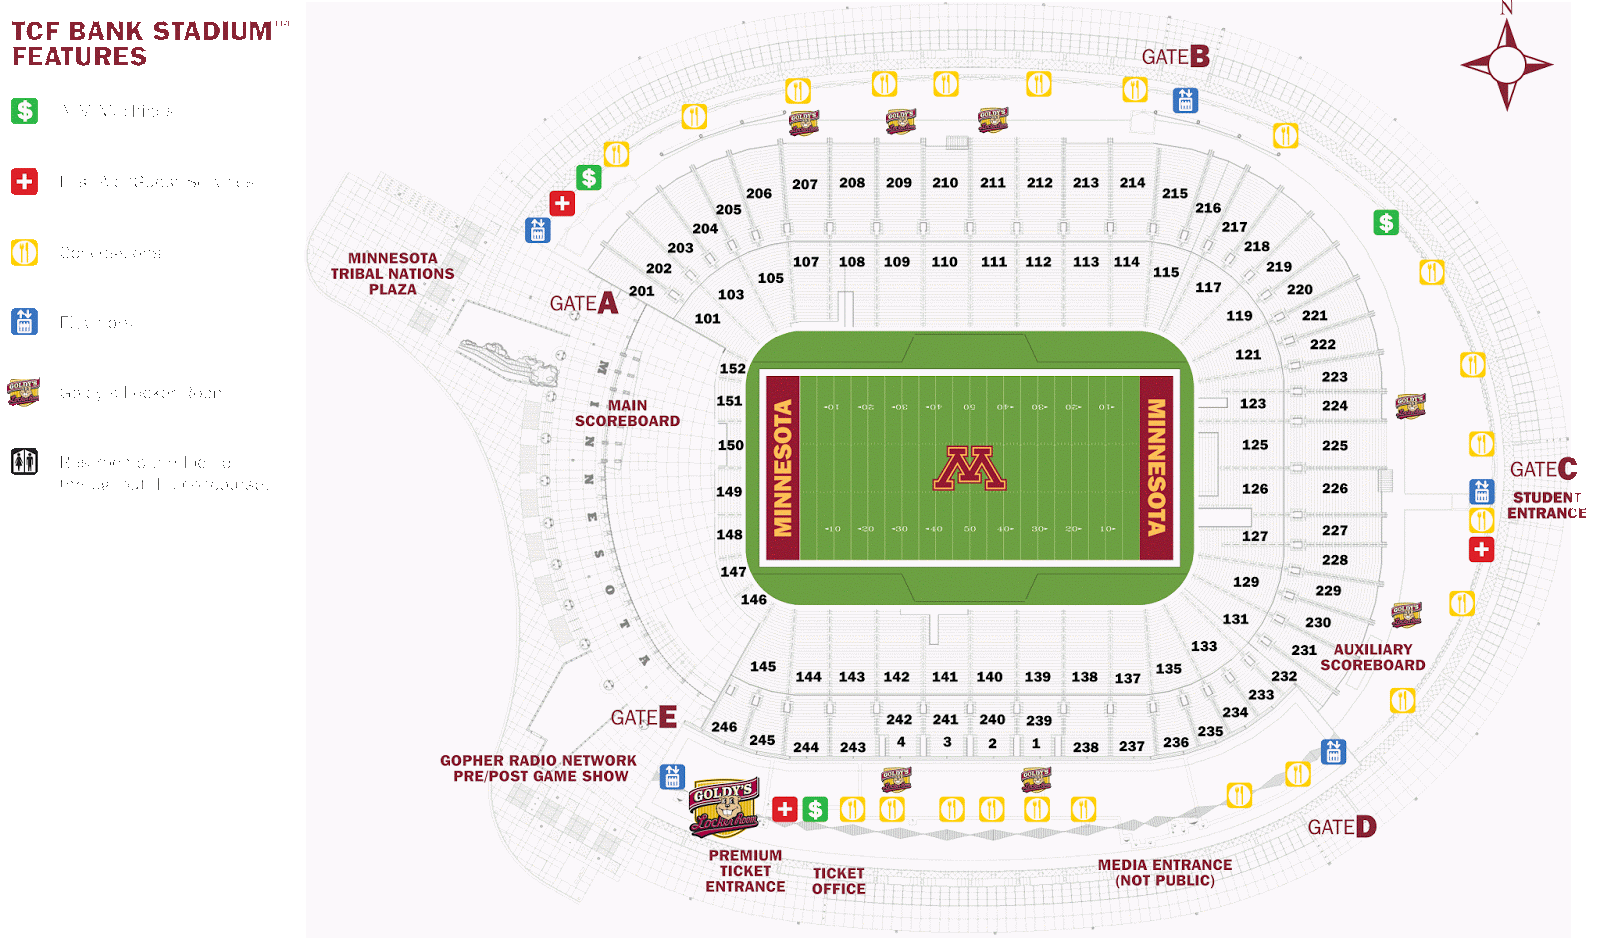 Minnesota Vikings Us Bank Stadium Seating Chart